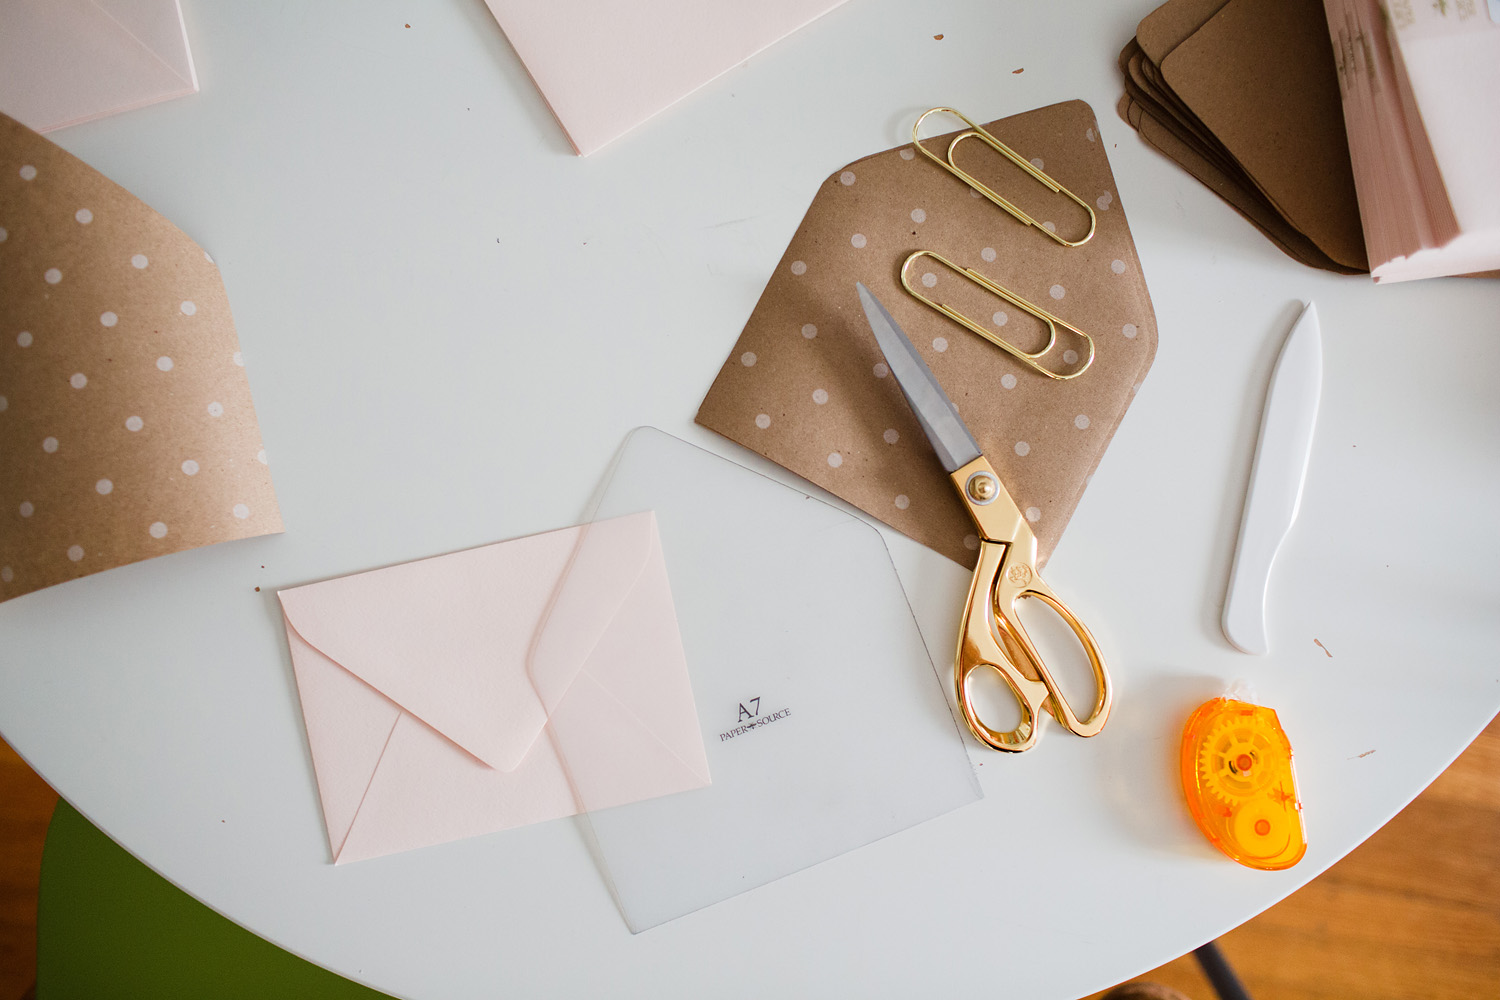 DIY envelope liners